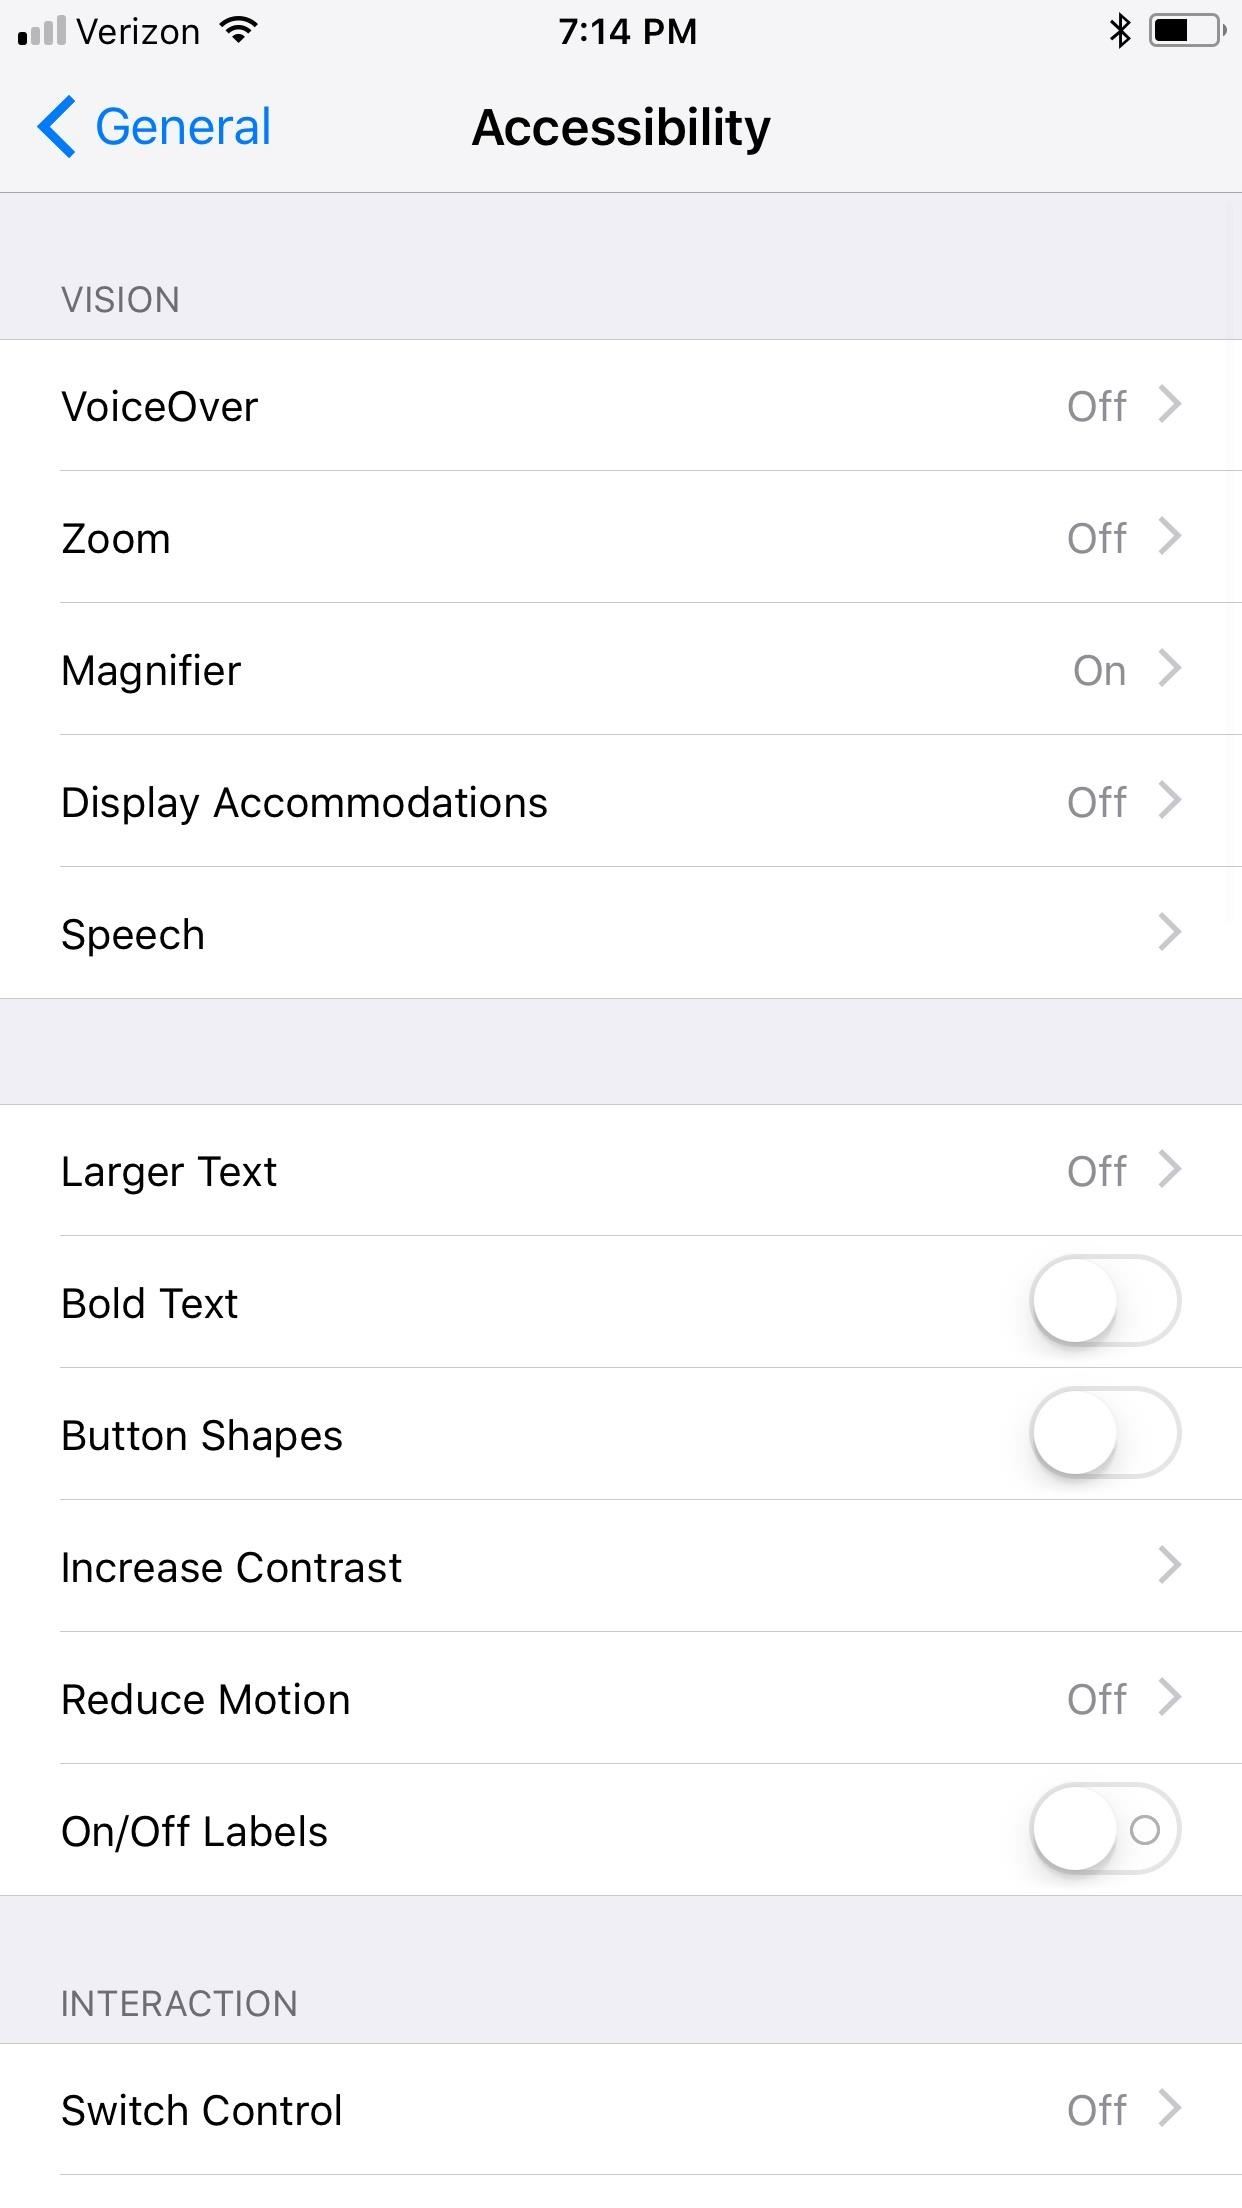 iOS 11 trás modo noturno finalmente ao iPhone, saiba como ativar 2